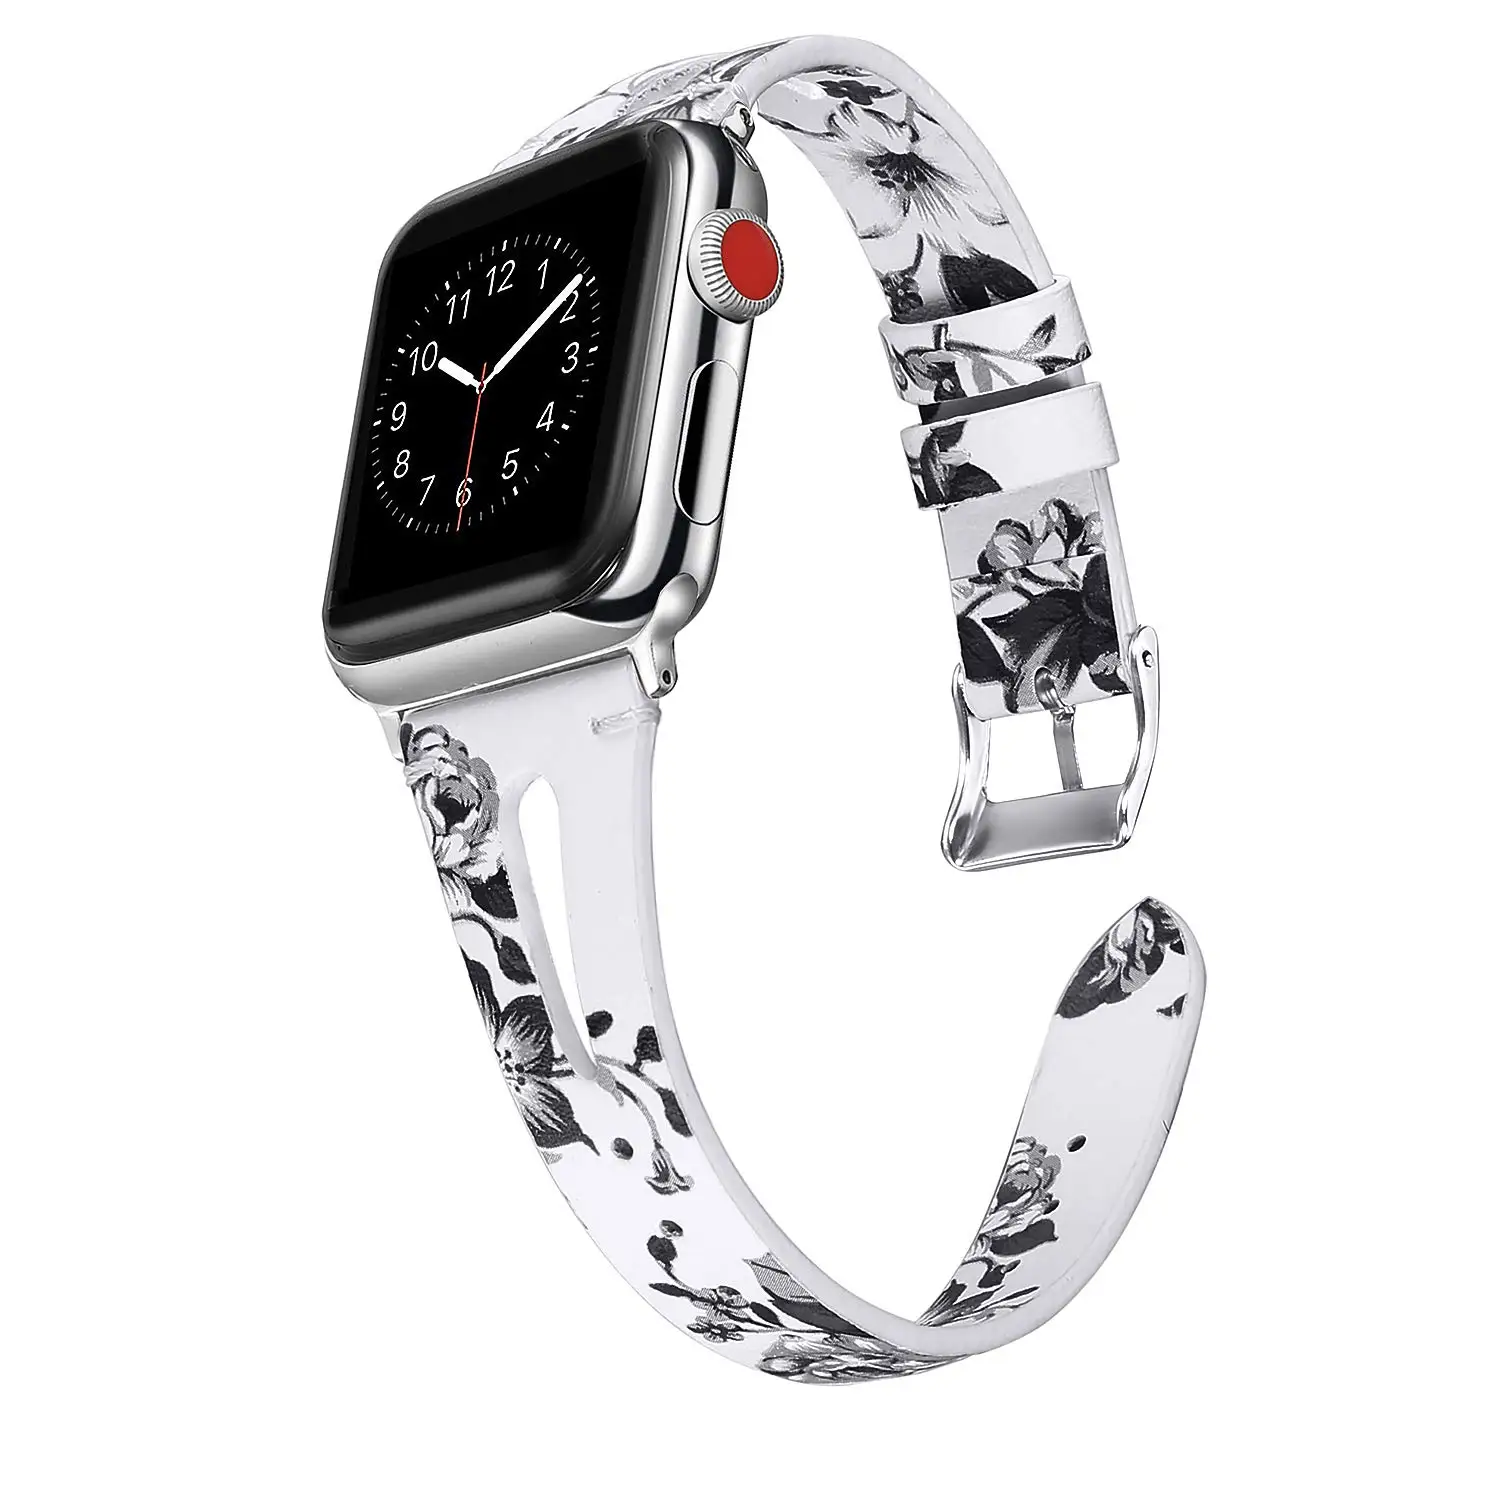 Кожаный браслет для Apple Watch 42 мм, 38 мм, 44 мм, 40 мм, серия 5, 4, 3, 2, 1, ремешок для Apple Watch iWatch, ремешок для часов wo для мужчин/мужчин - Цвет ремешка: whiteflower